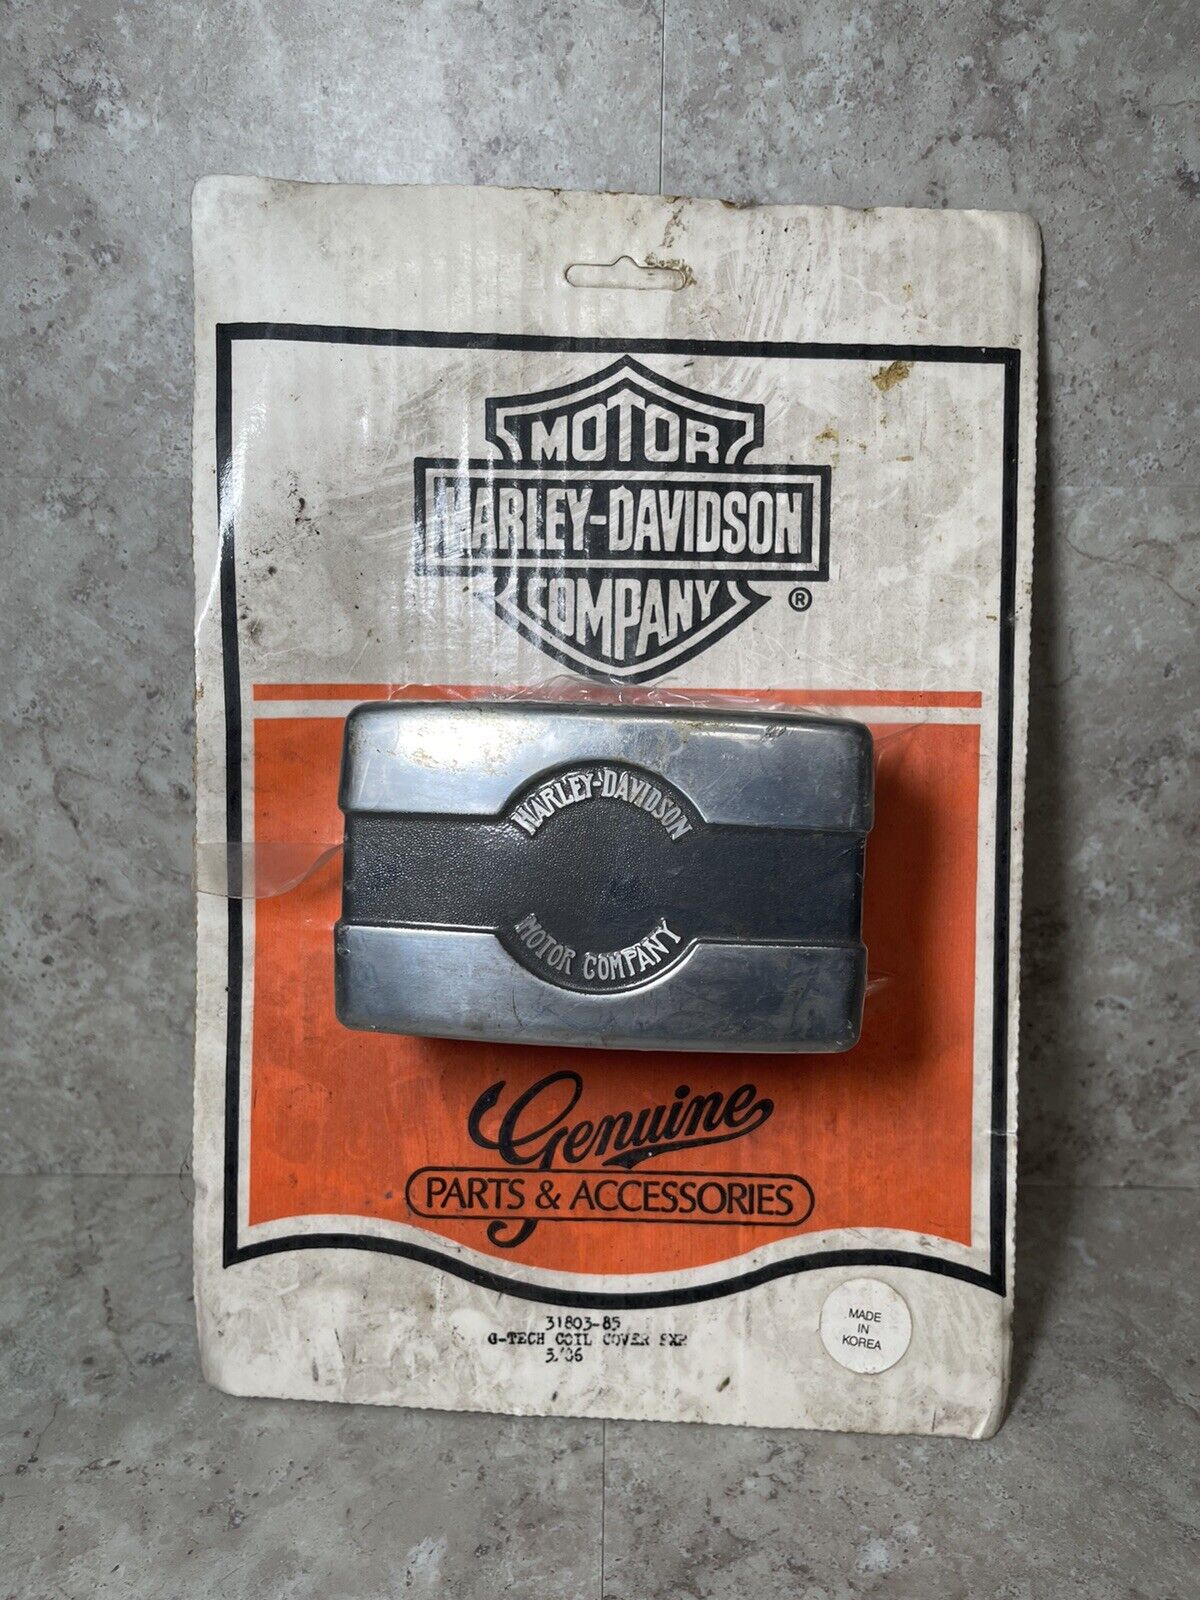 Harley Davidson G-TECH FXR Coil Cover Part # 31803-85   5/86